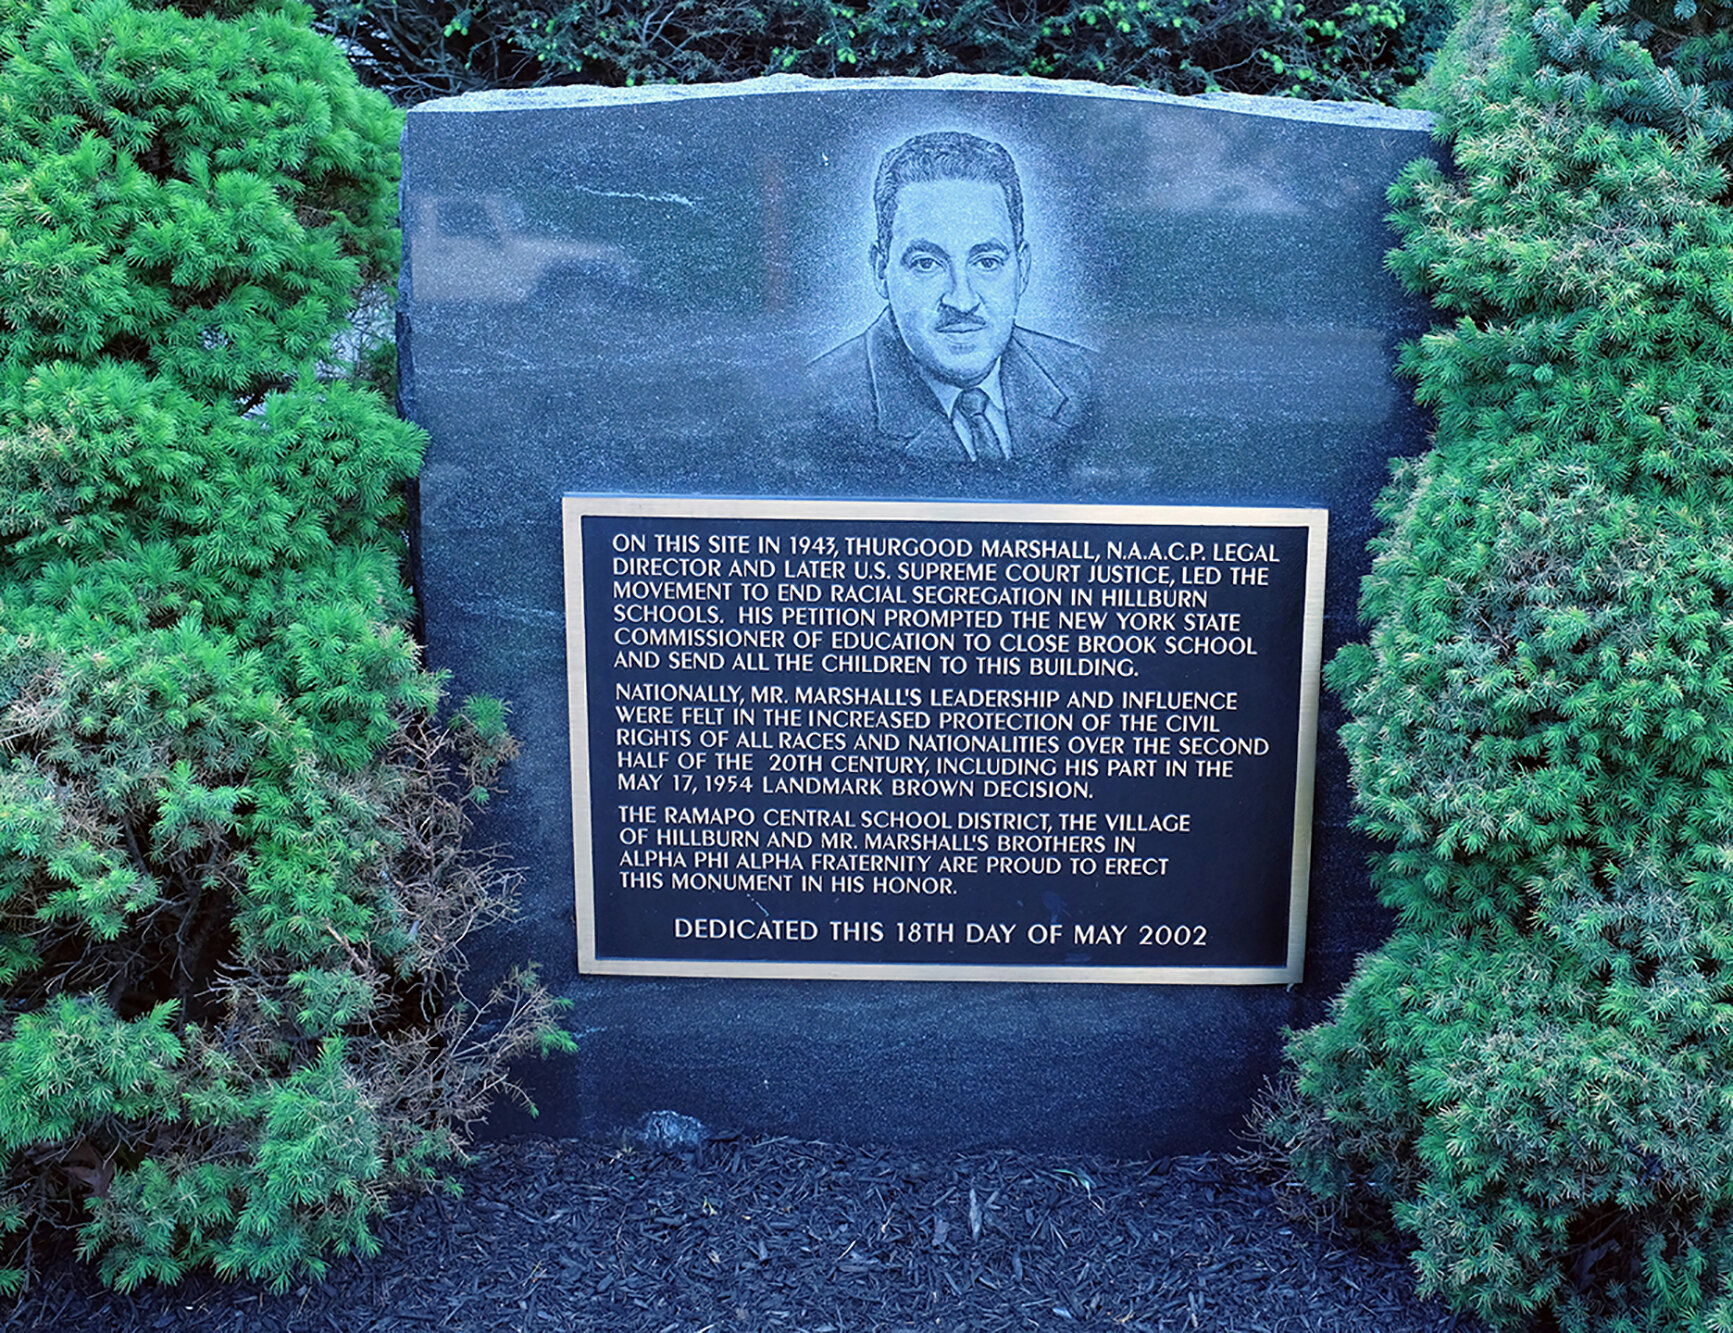 Thurgood Marshall Monument, Hillburn, NY